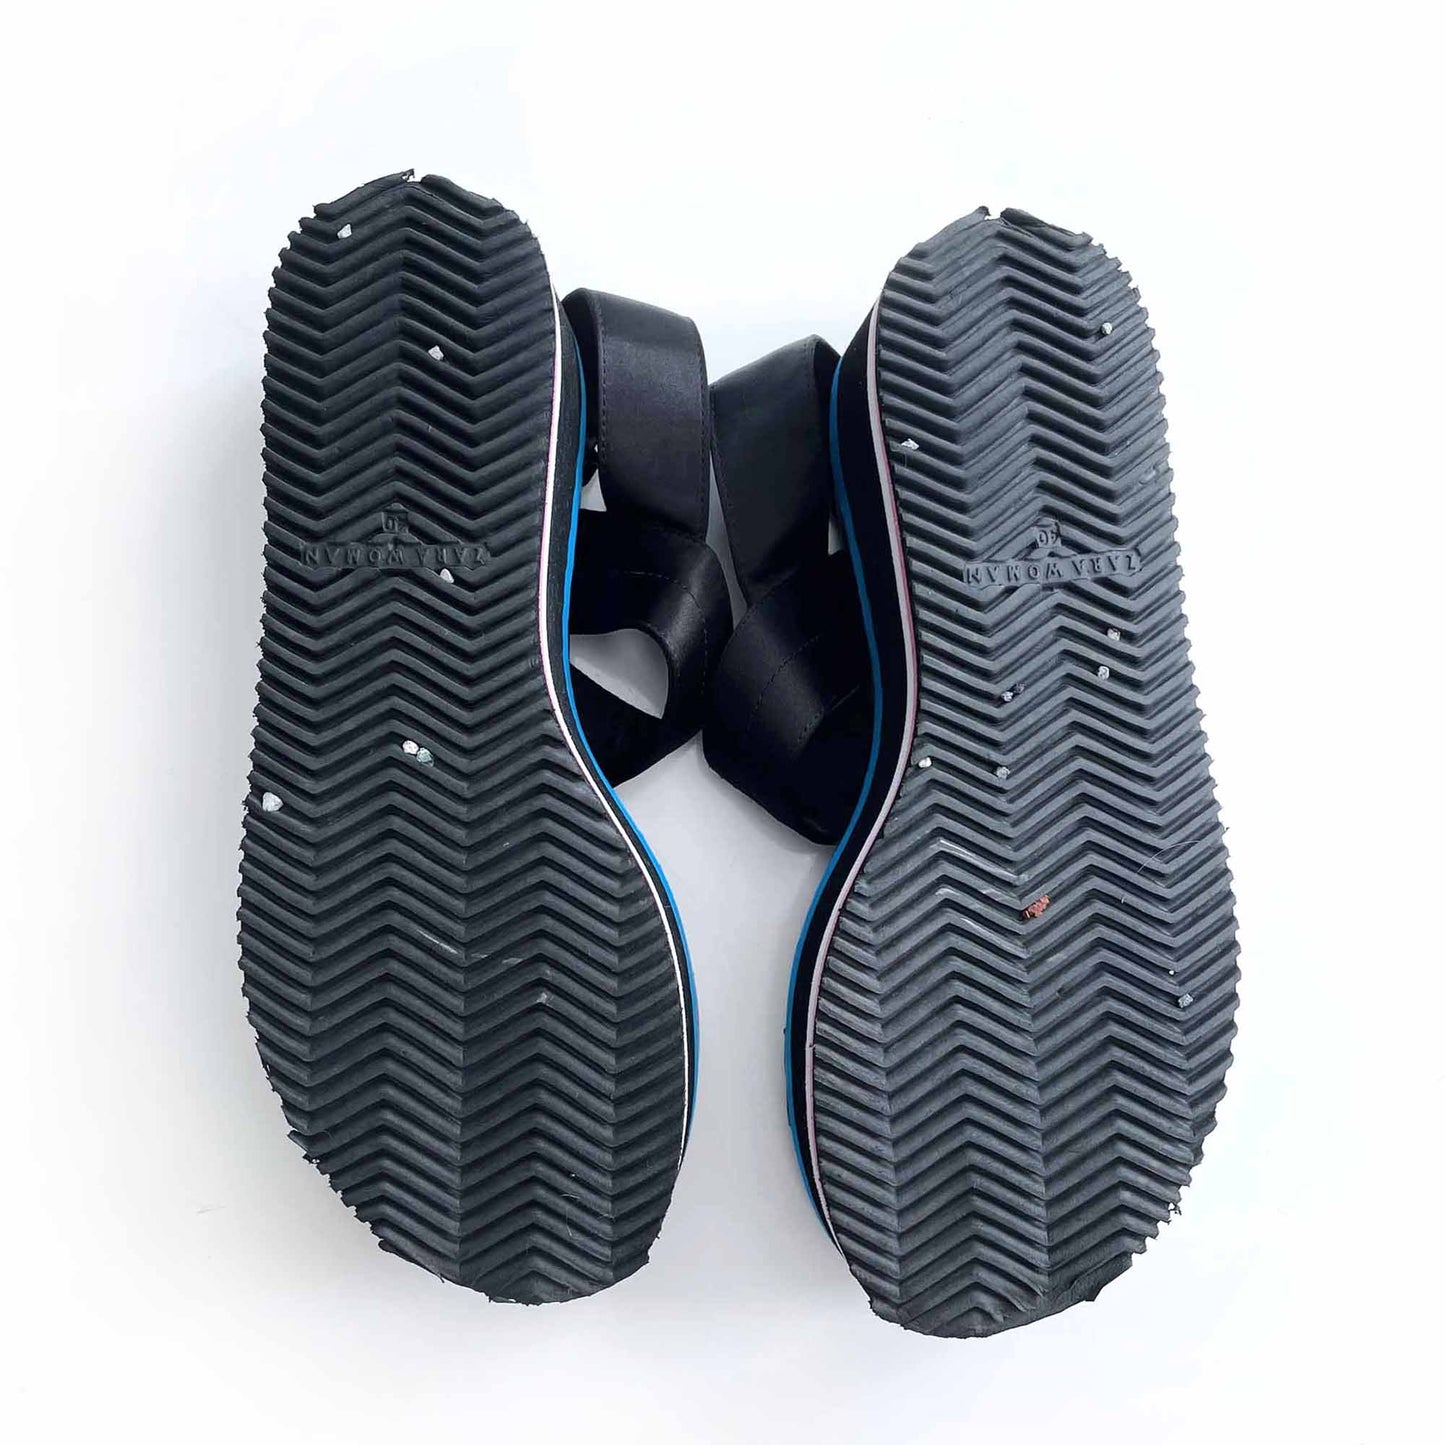 zara platform teva style sandals - size 40